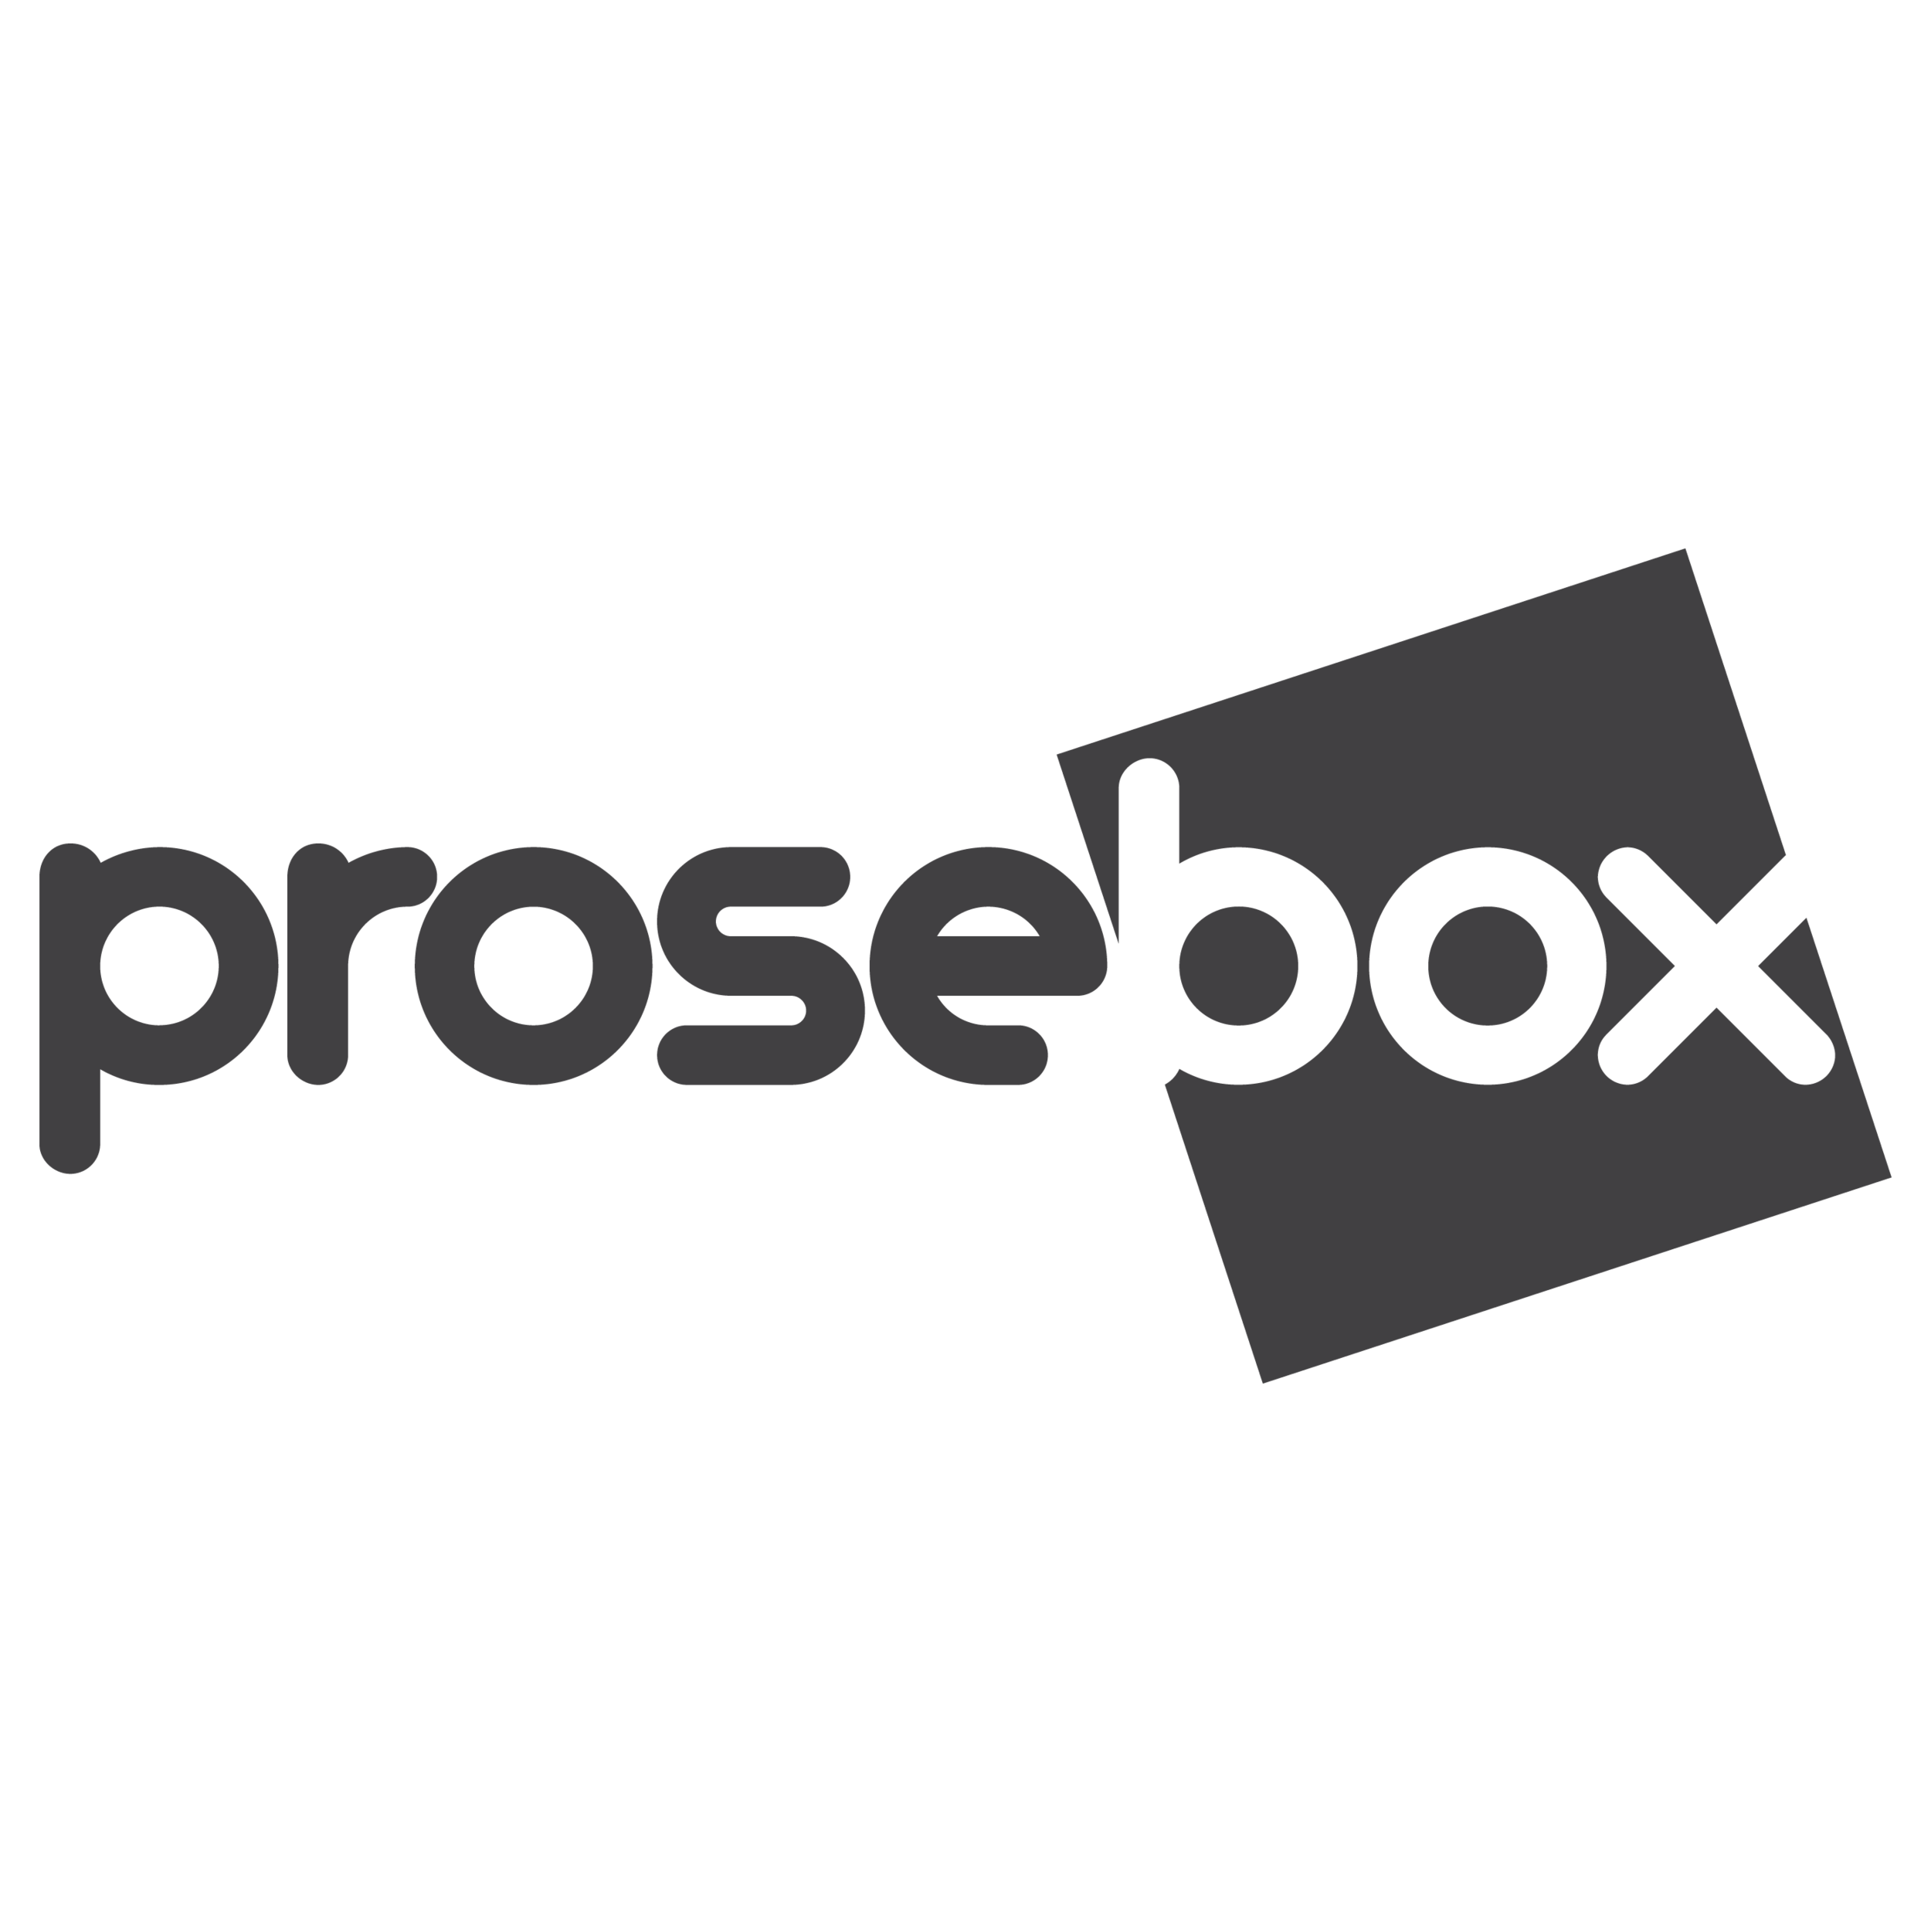 prosebox.png